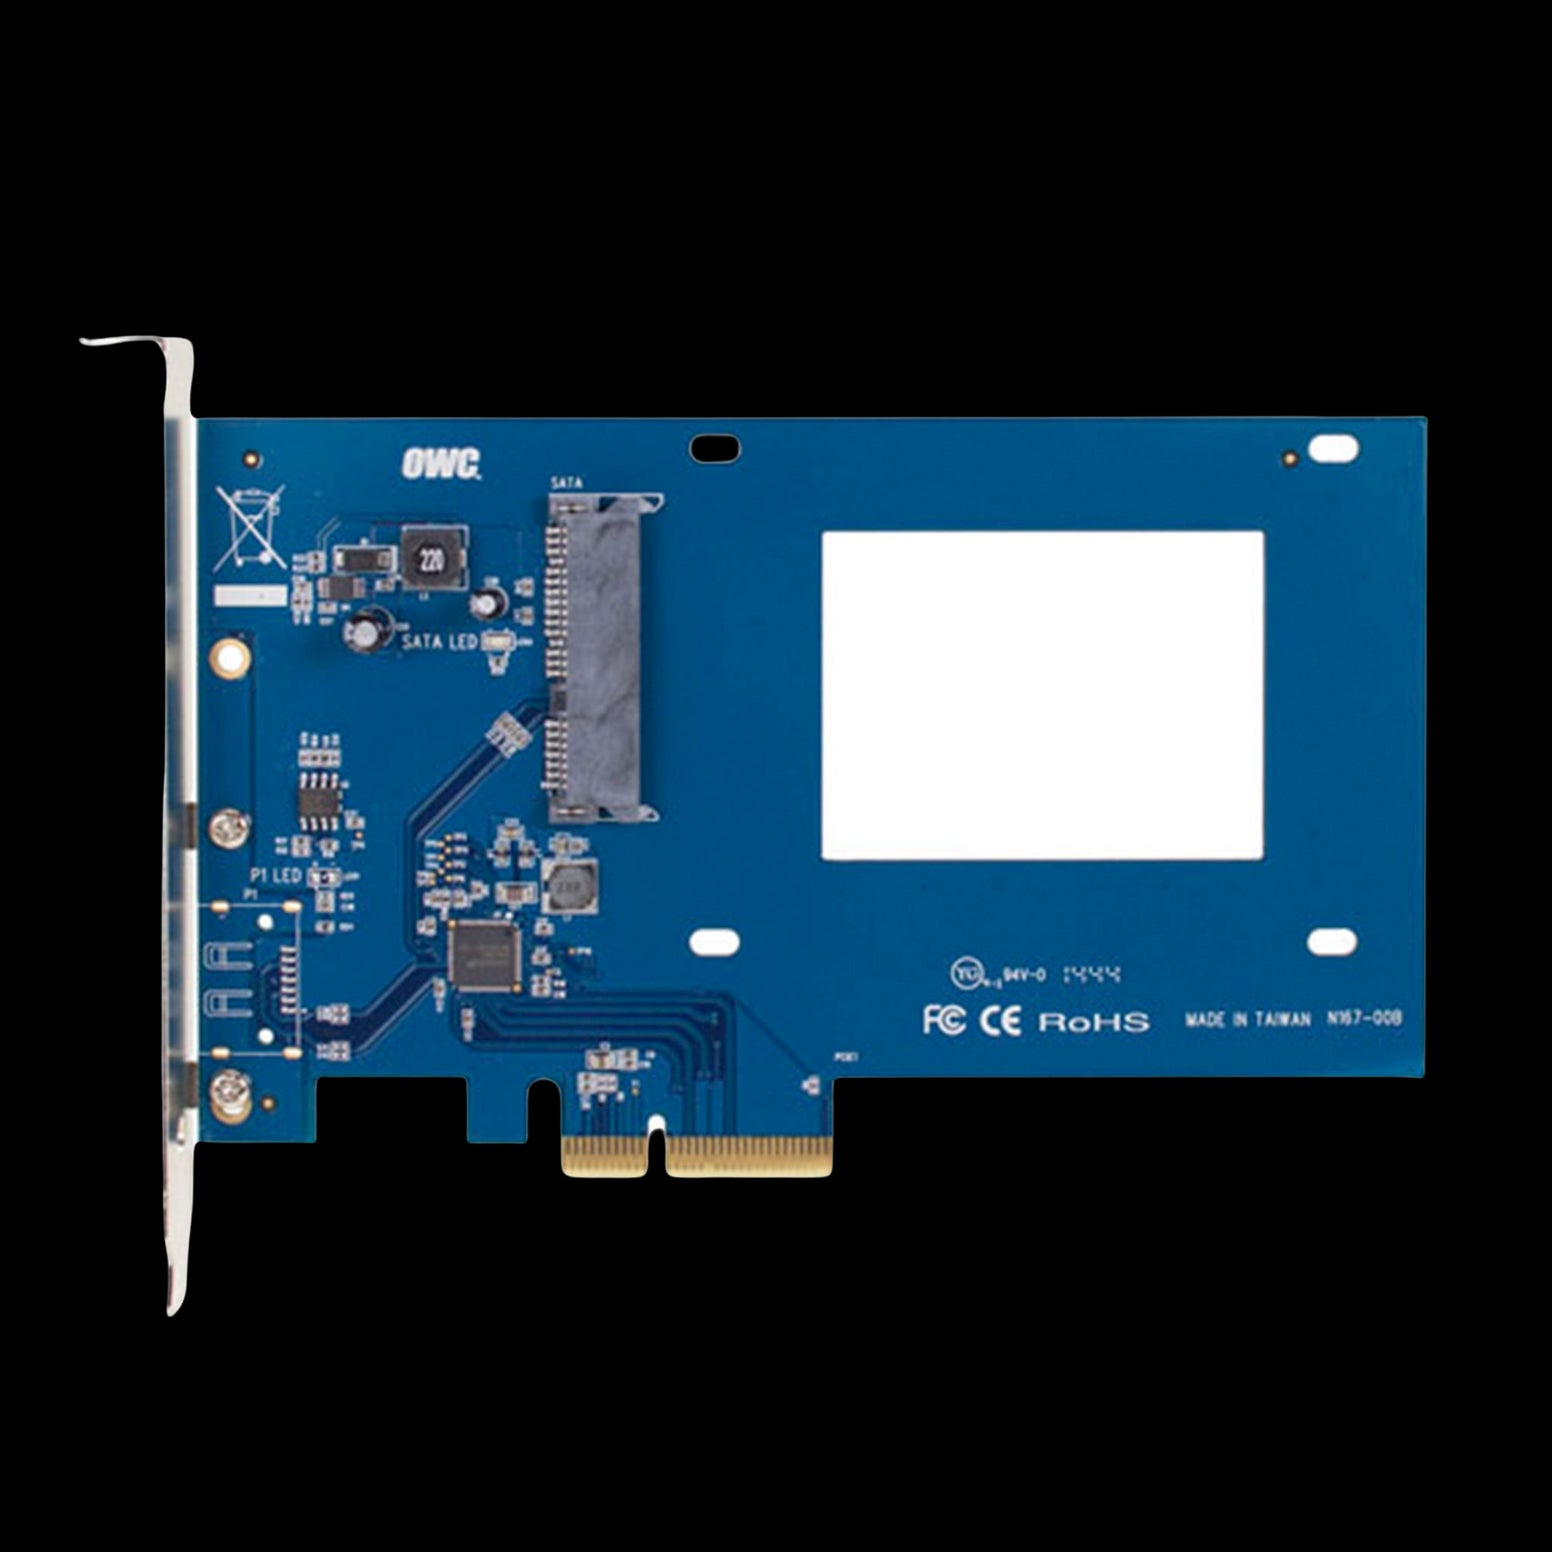 SSD 500Go AVP500XT 2.5 Angelbird